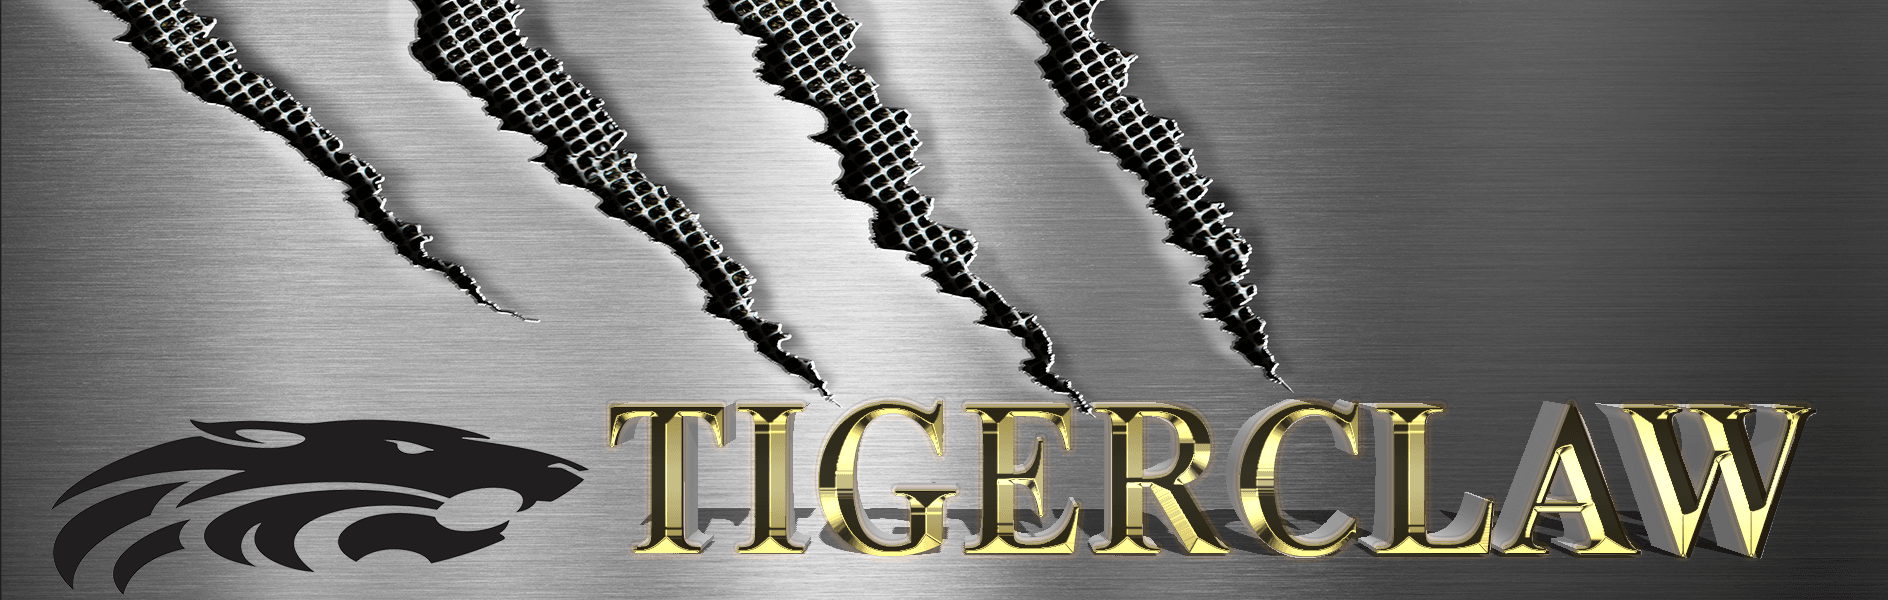 TIGER-CLAW bannière